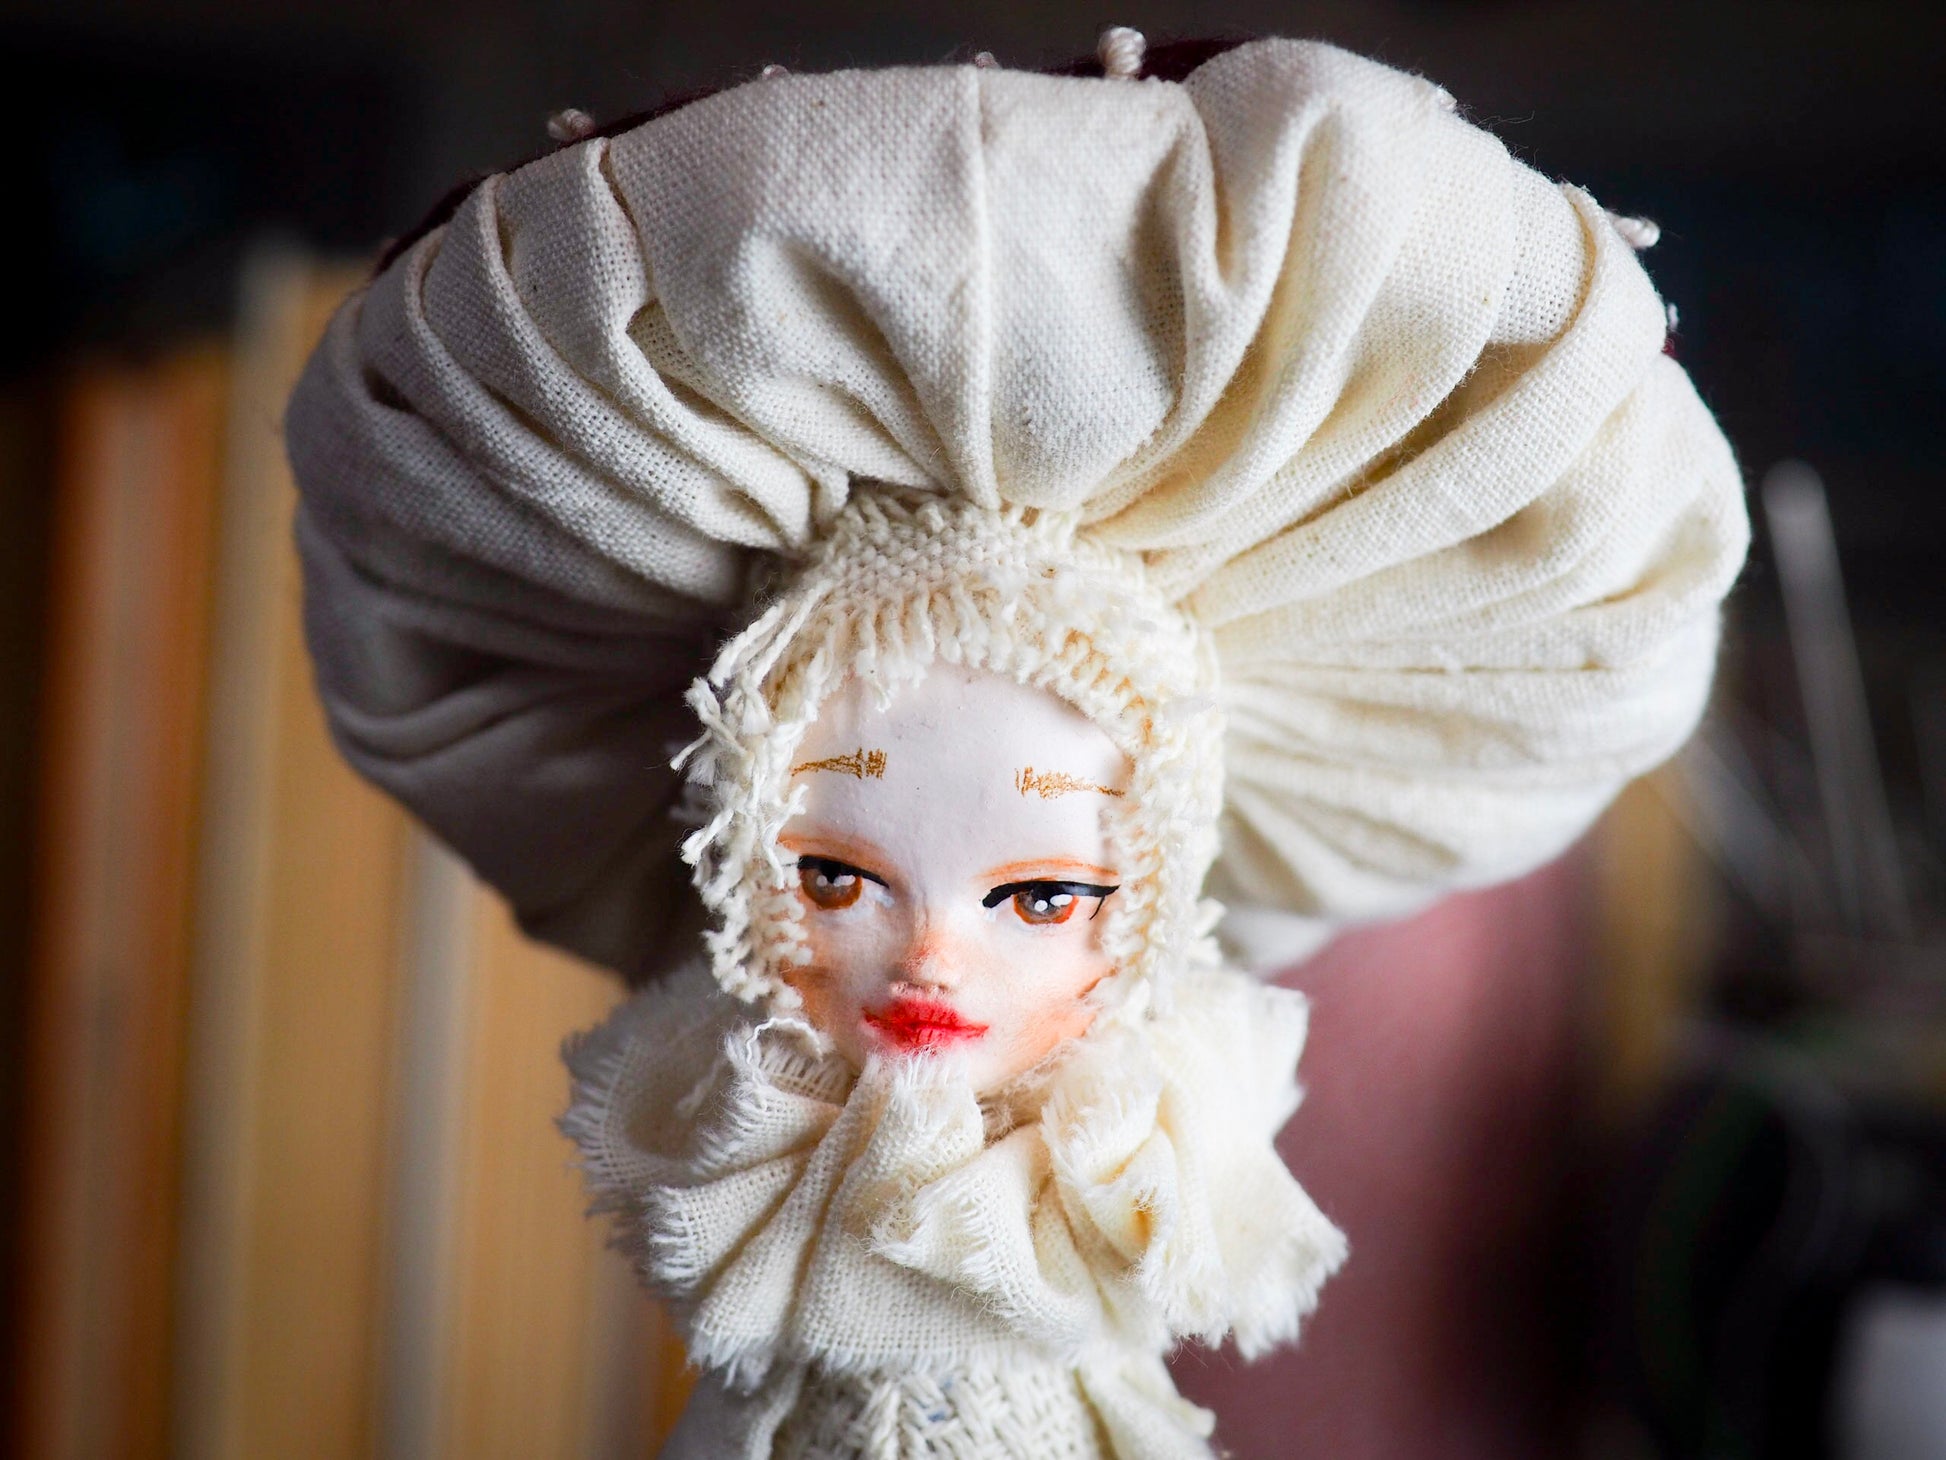 MUSHROOM SPECIMEN N. 6 - Original woodlands handmade art doll by Danita Art, Art Doll by Danita Art